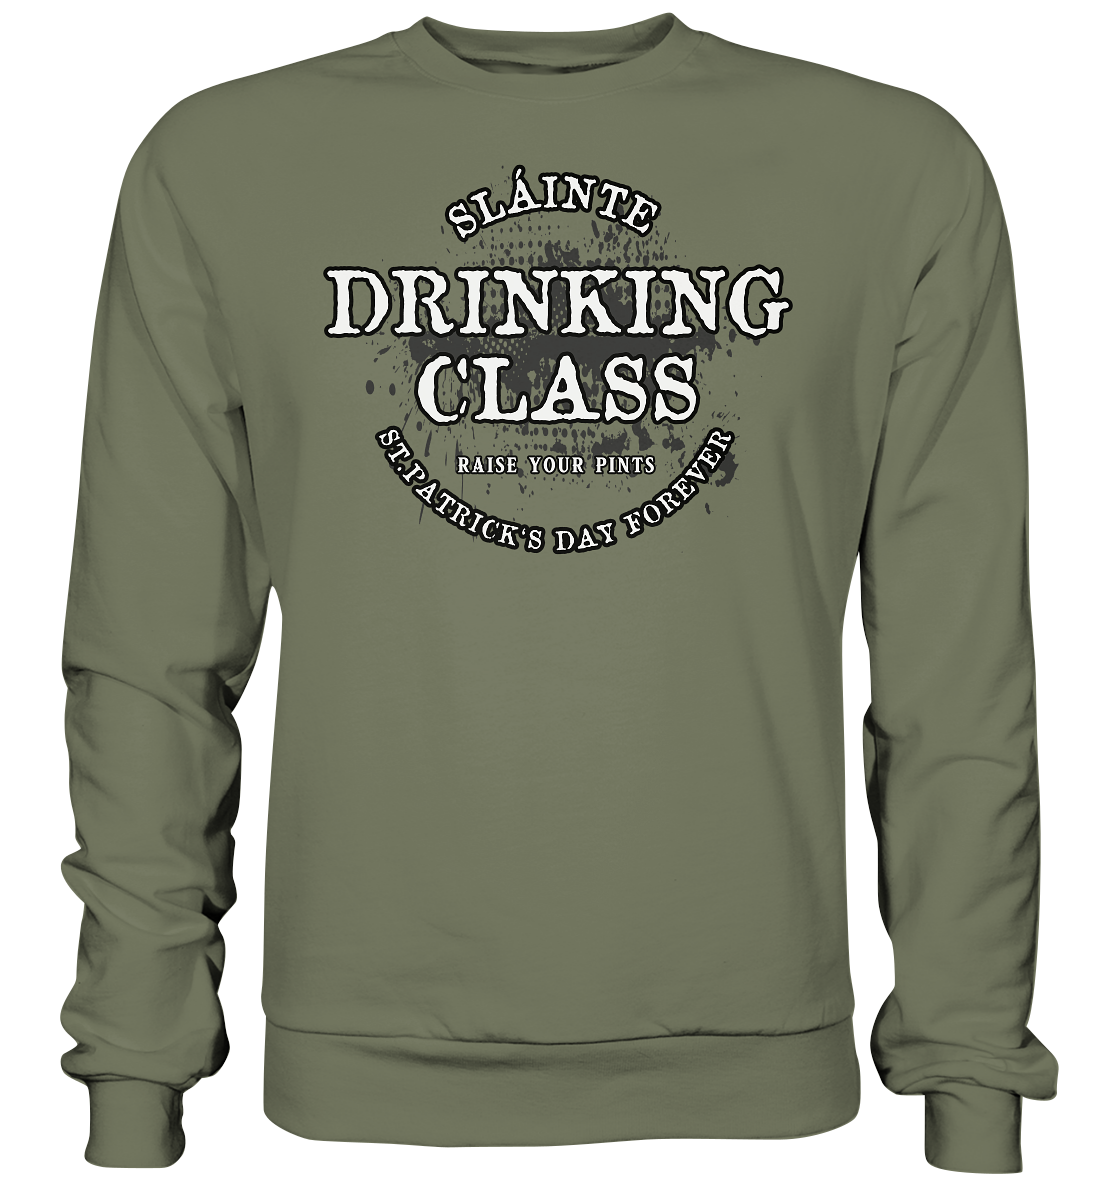 Drinking Class "St.Patrick's Day Forever" - Premium Sweatshirt